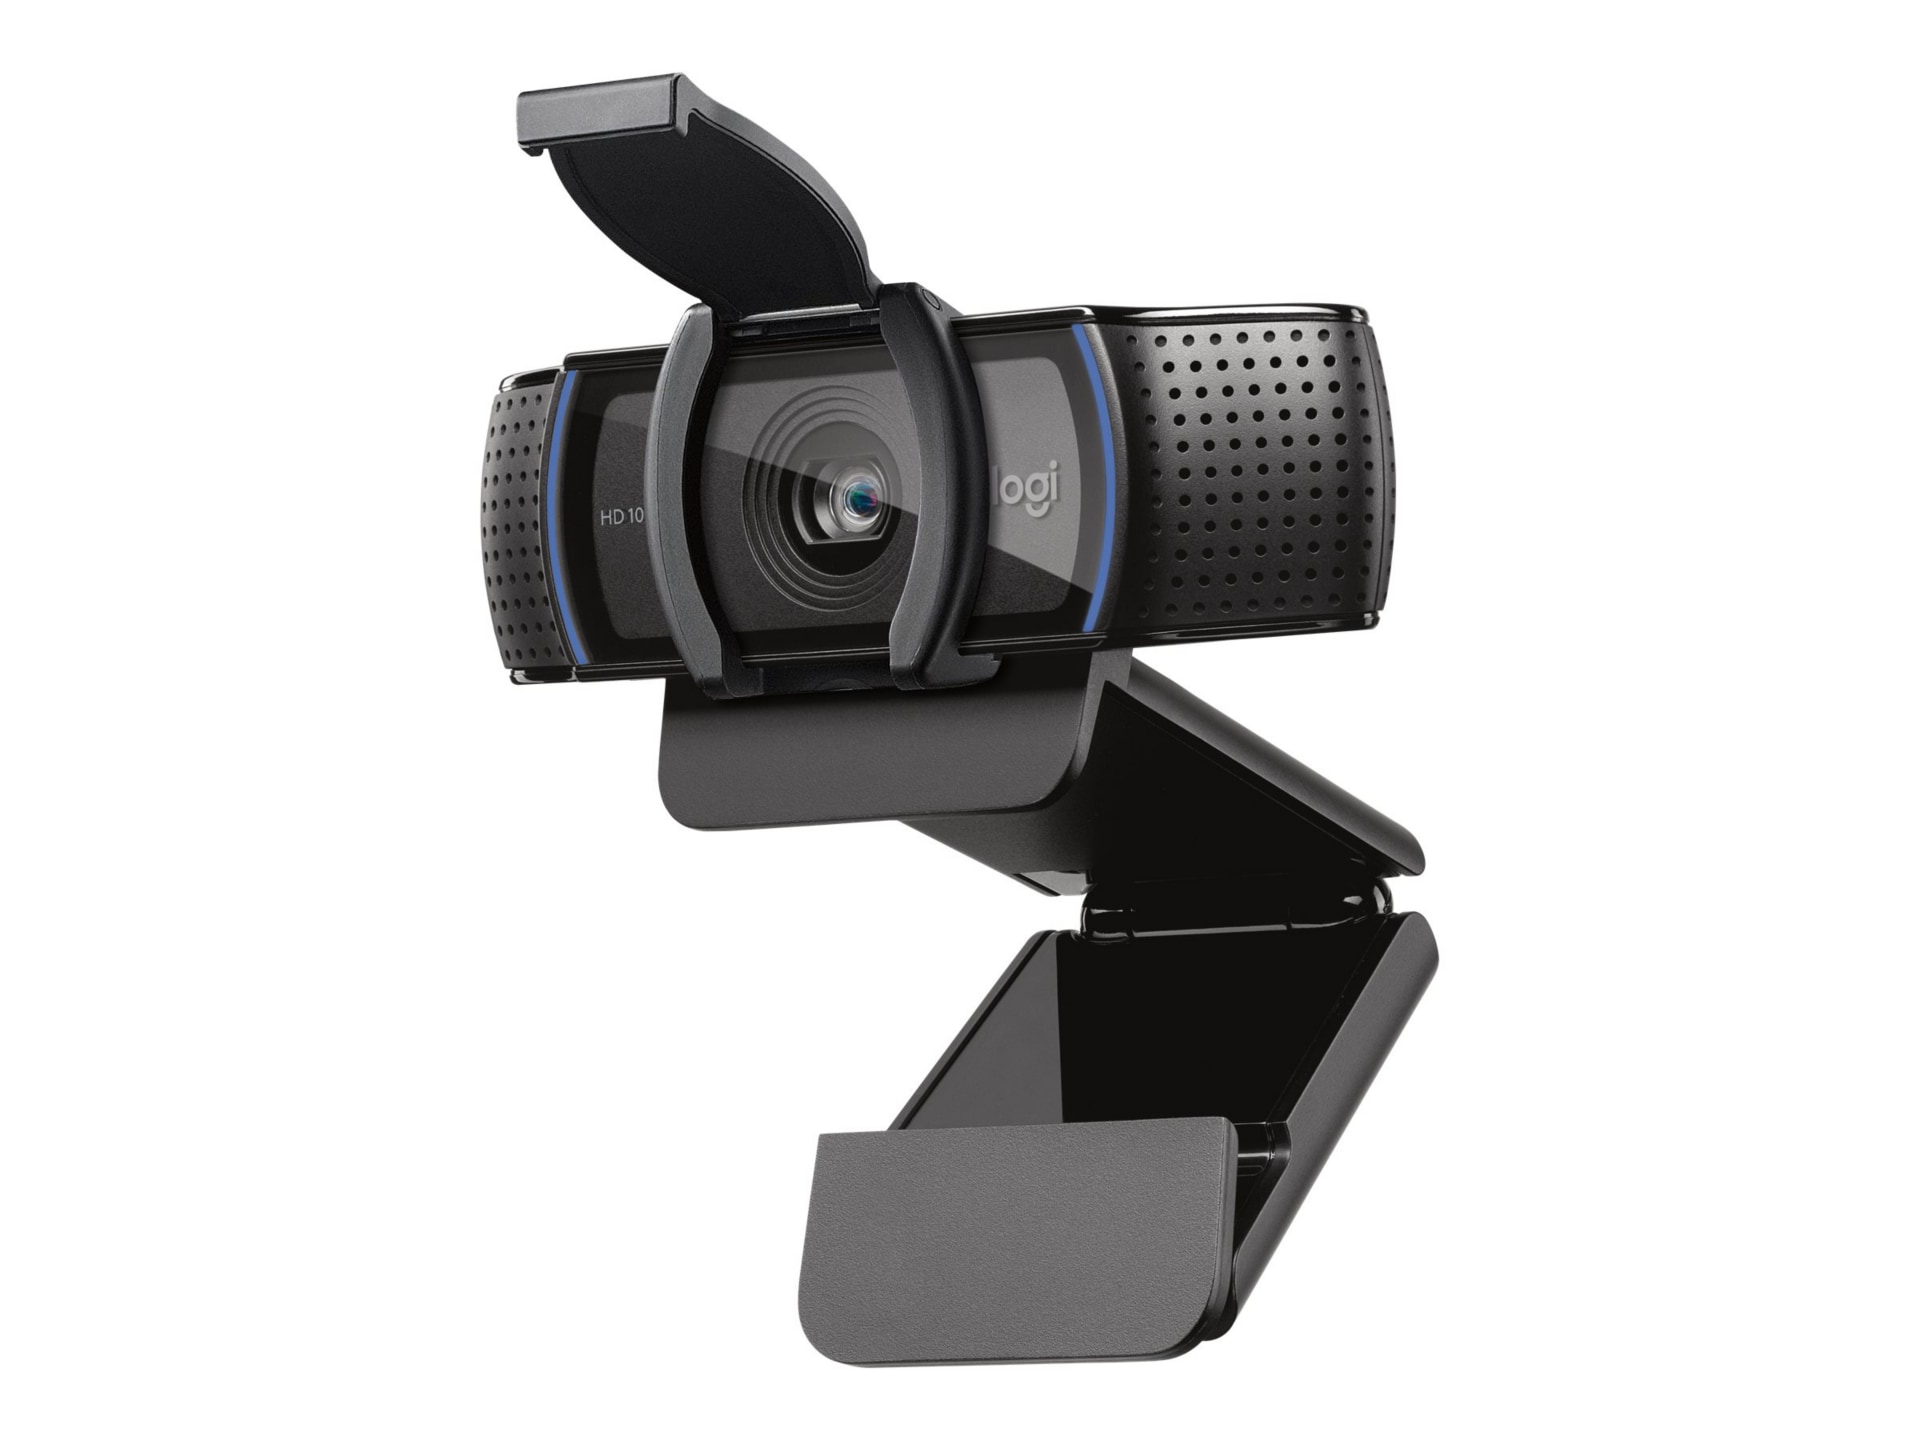 1080p HD USB Computer Camera avec microph externe Webcam Pc Gamer